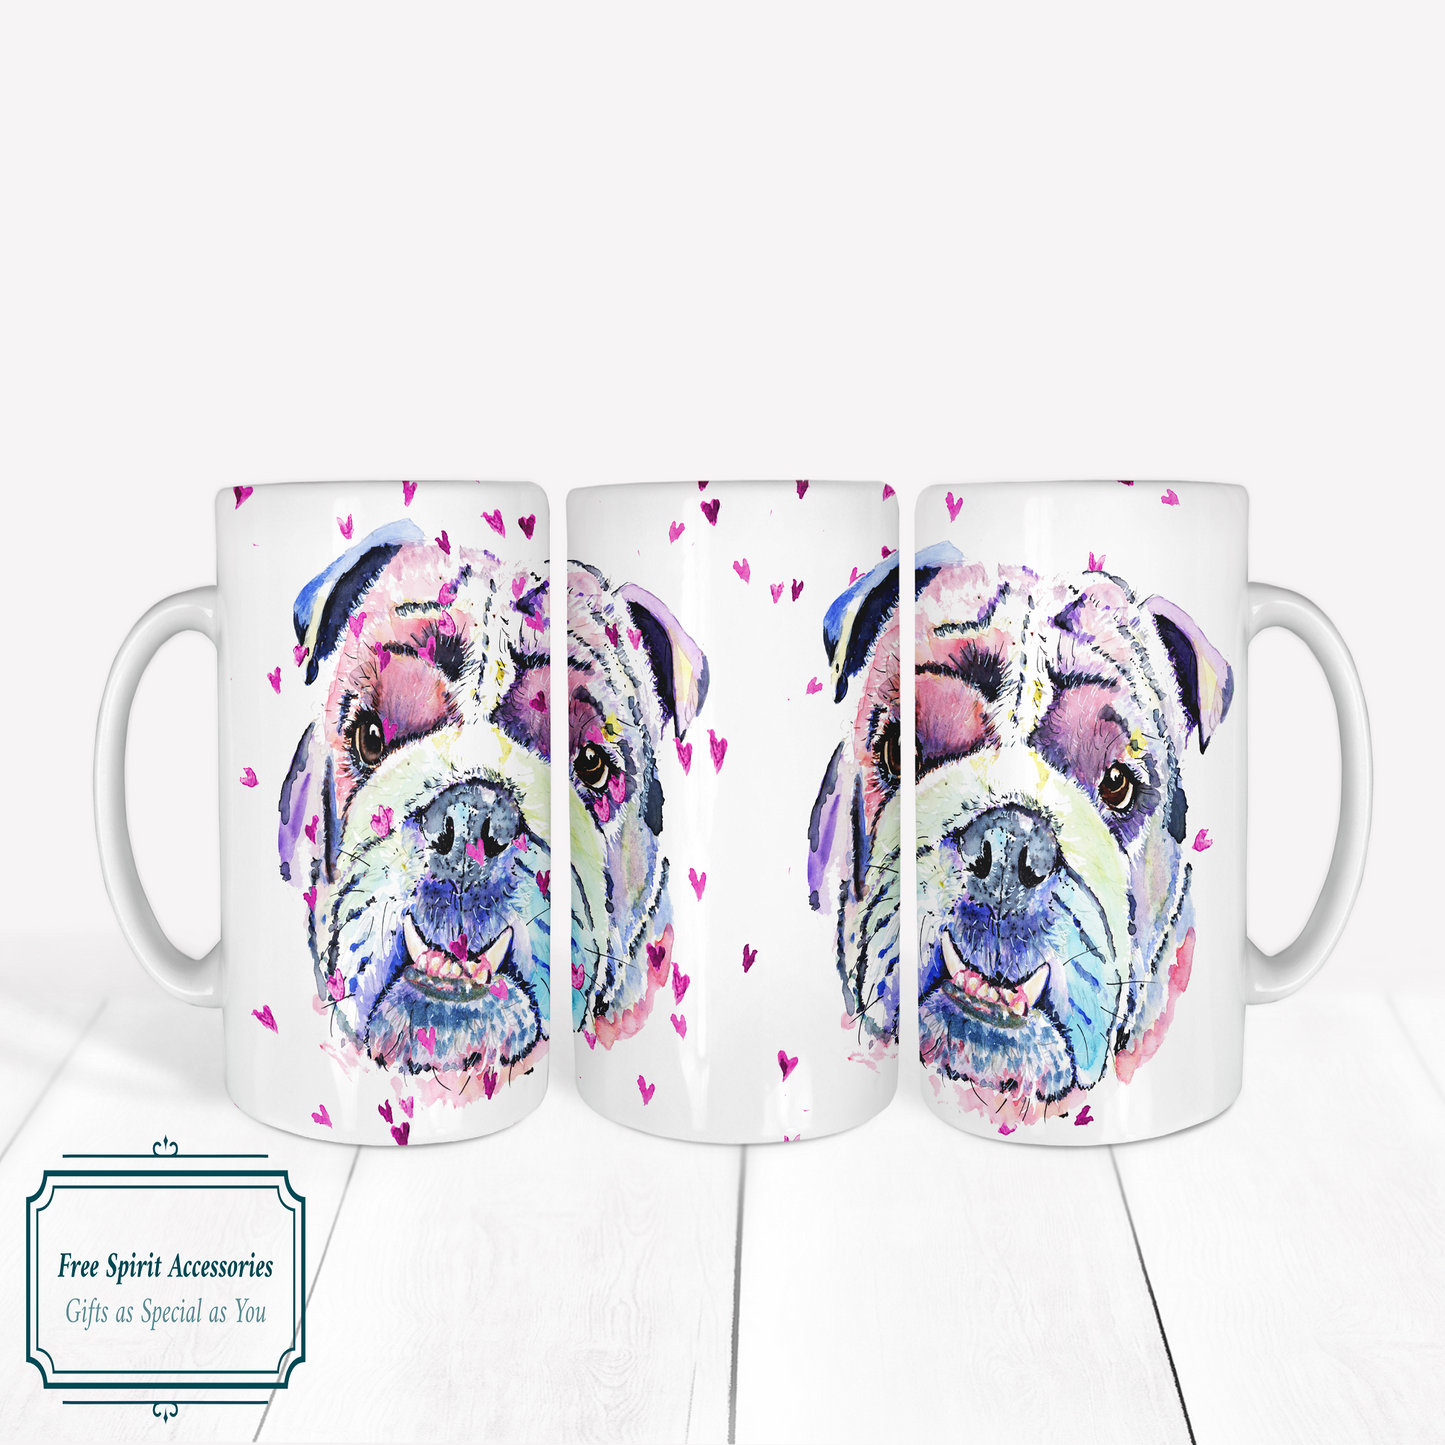  Beautiful Bulldog Head Coffee Mug by Free Spirit Accessories sold by Free Spirit Accessories